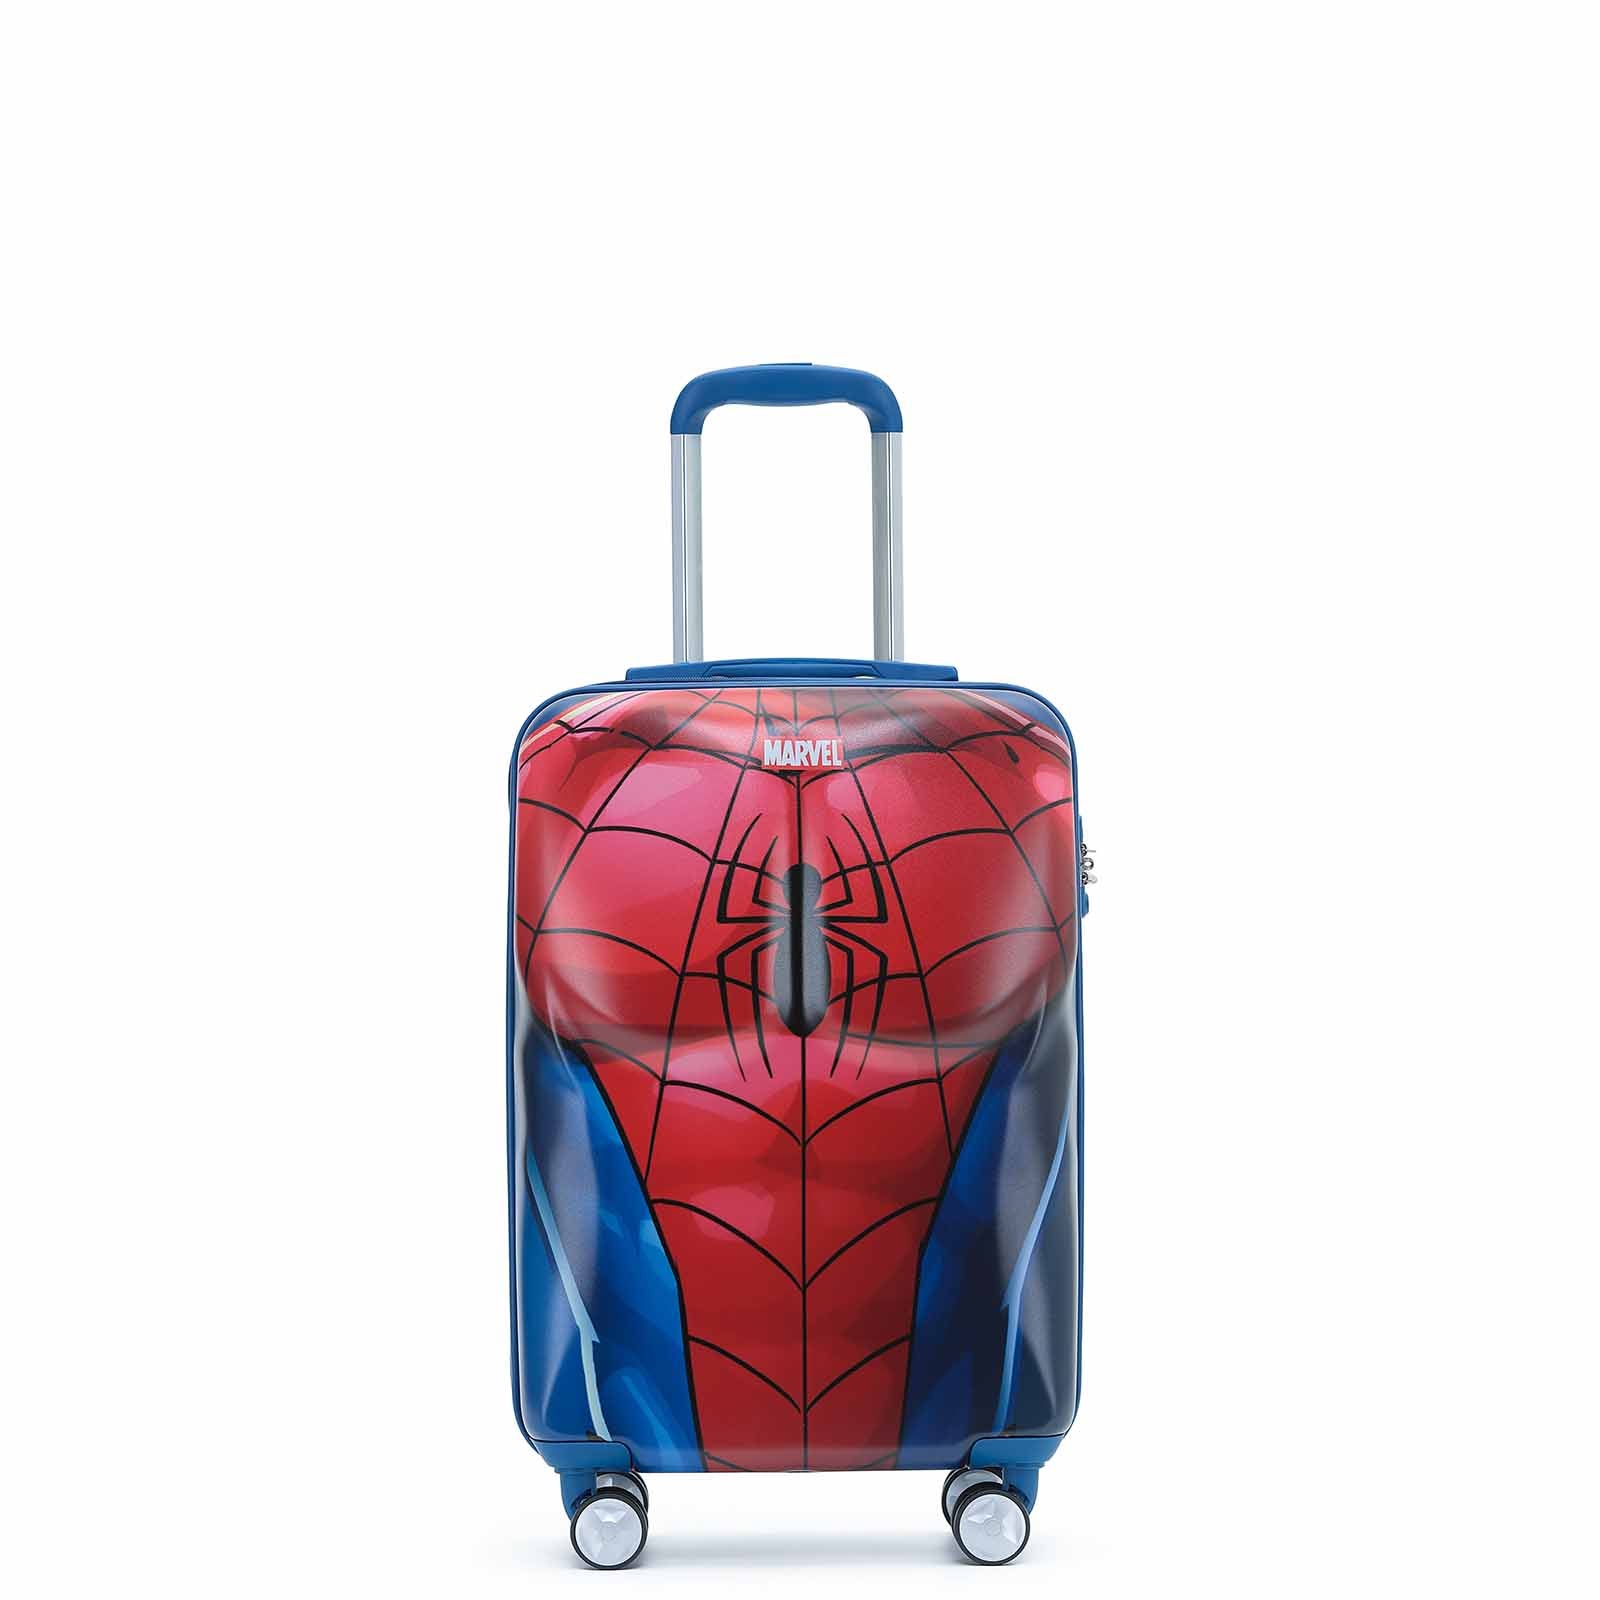 Marvel Spider-Man 28inch Large Suitcase